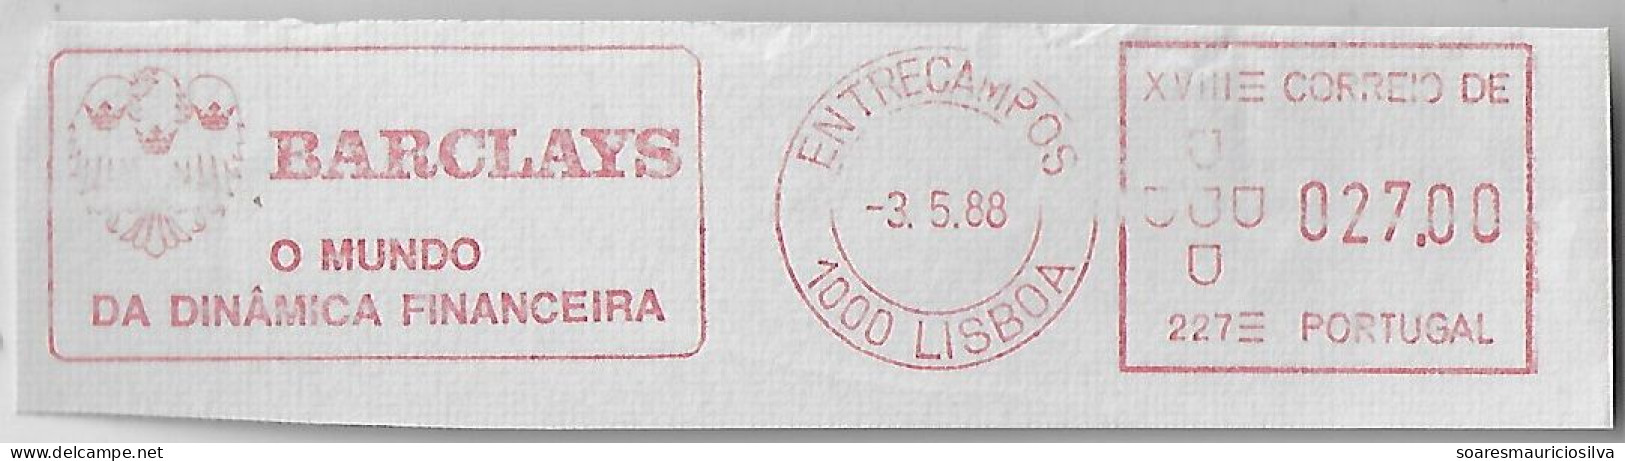 Portugal 1988 Fragment Meter Stamp Hasler Mailmaster Slogan Barclays The World Of Financial Dynamics Lisbon Entrecampos - Brieven En Documenten